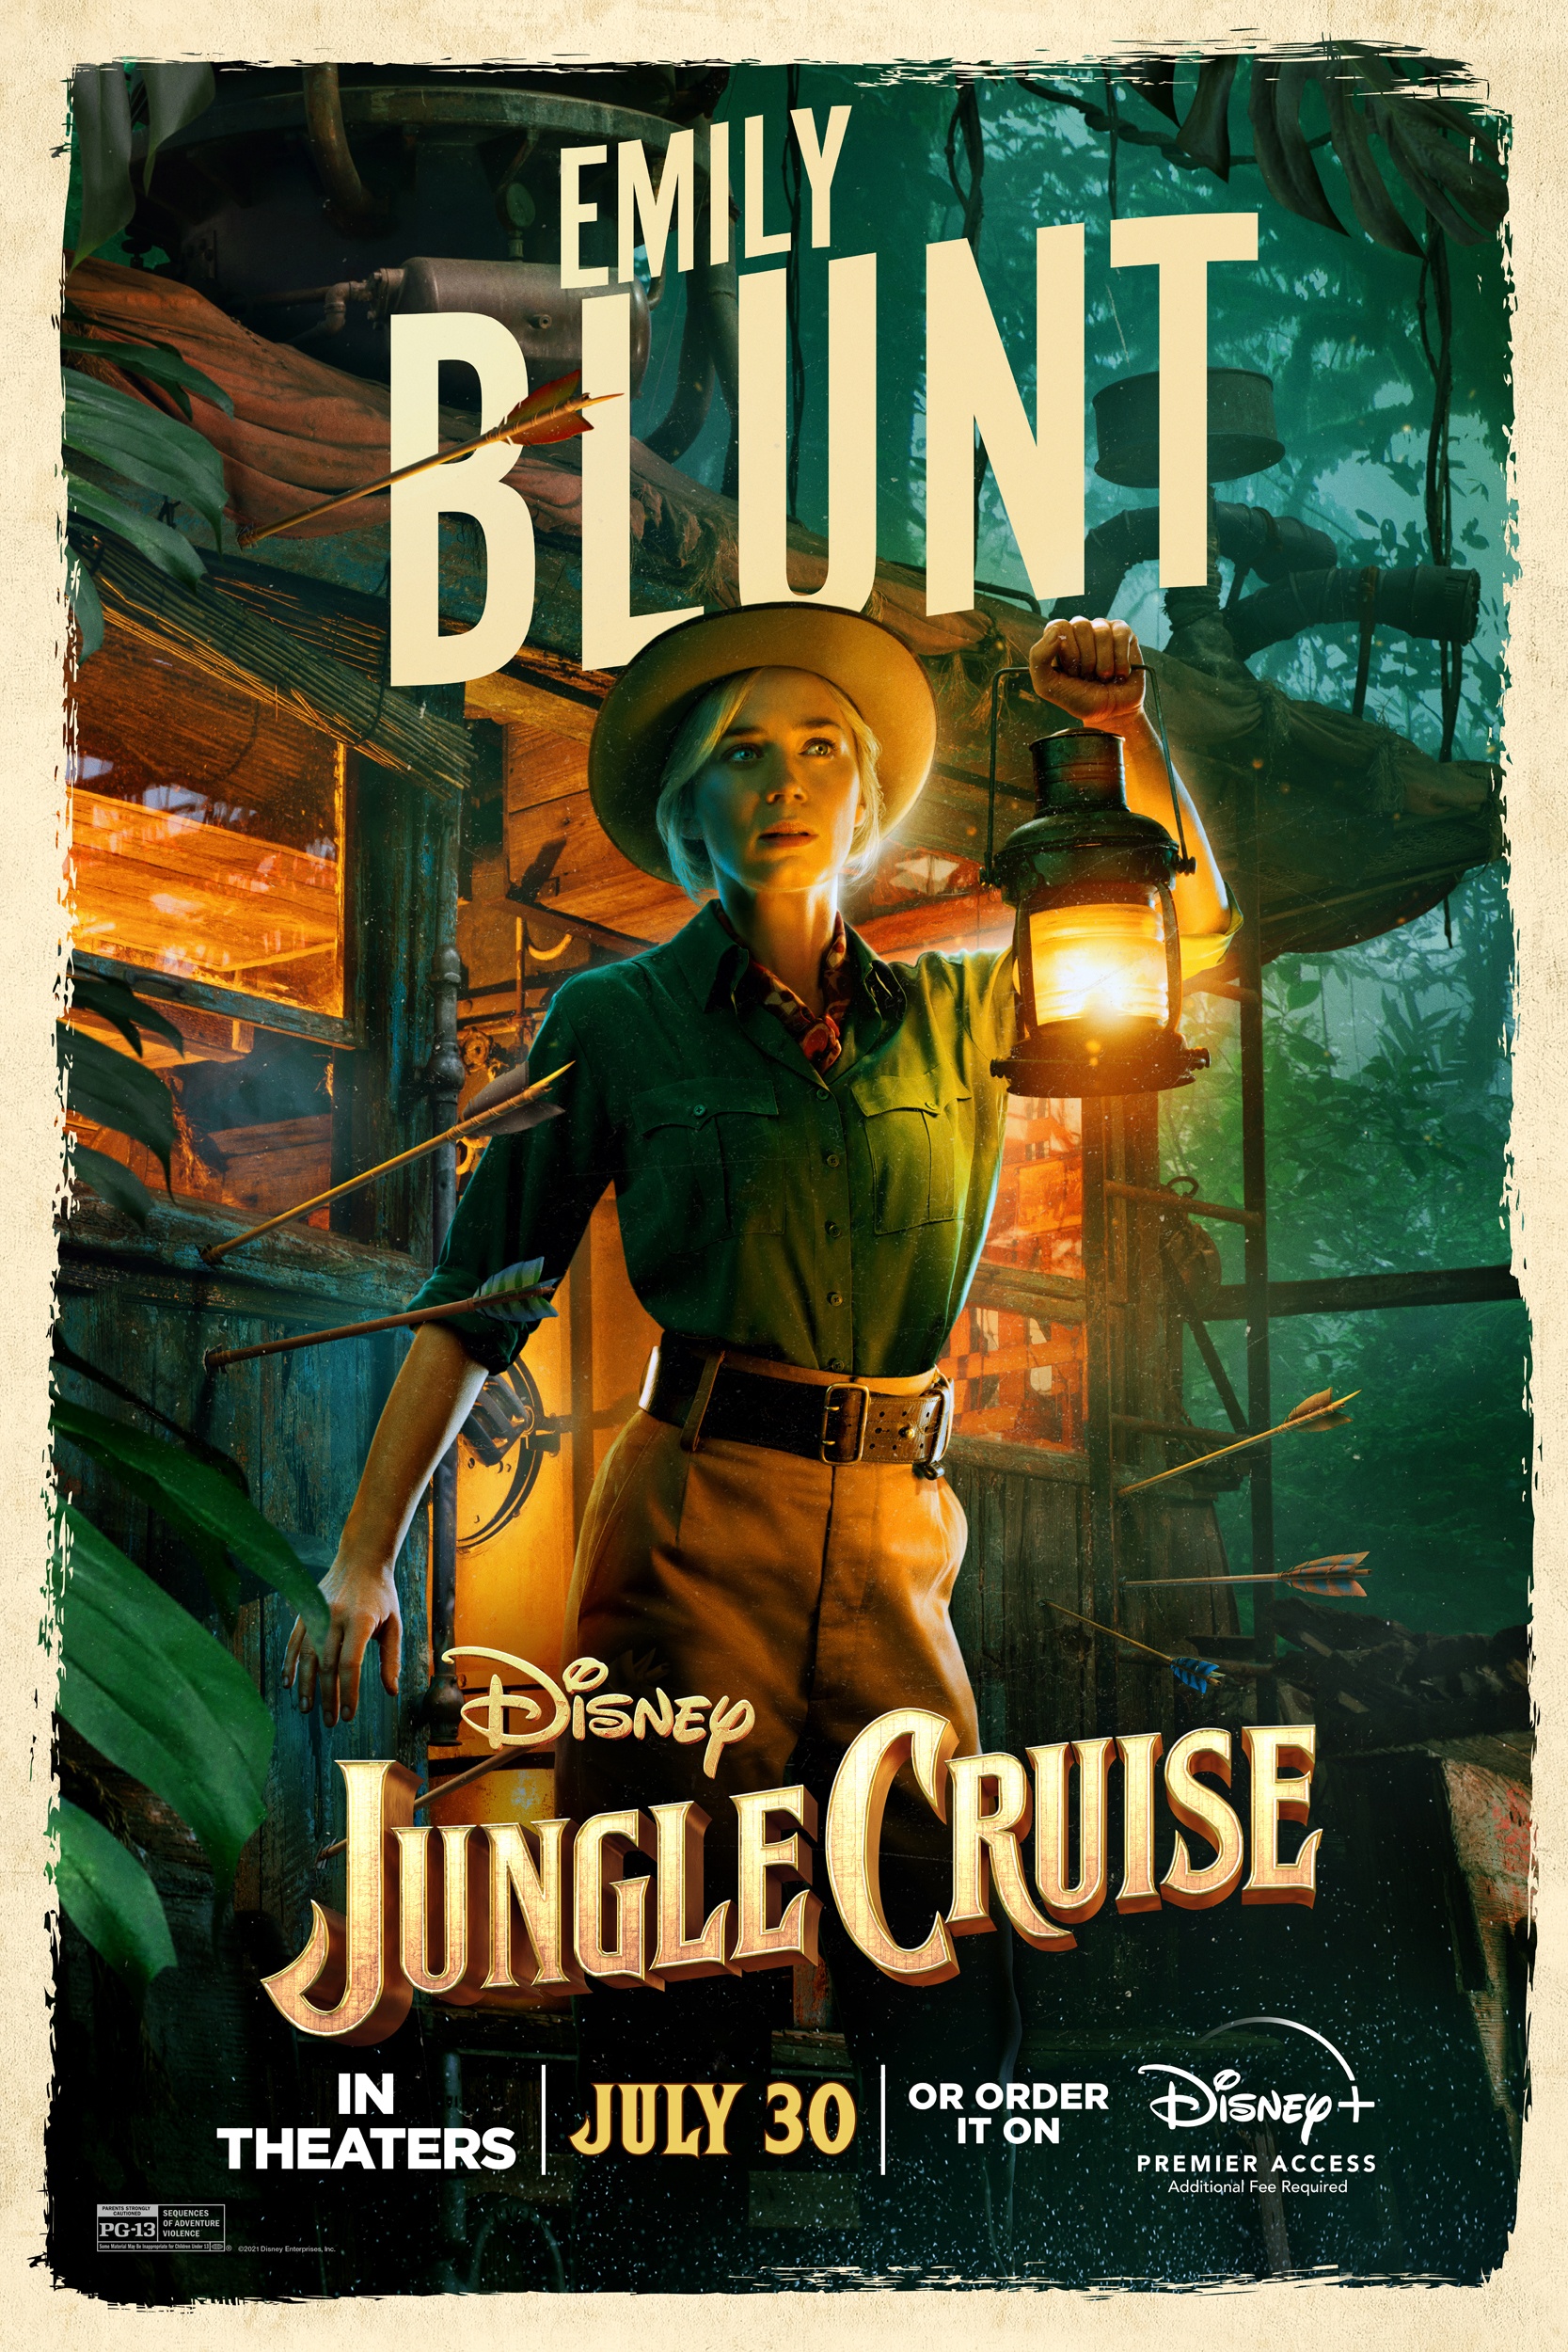 Pinky Review: Disney ‘Jungle Cruise’ Starring Dwayne Johnson & Emily Blunt